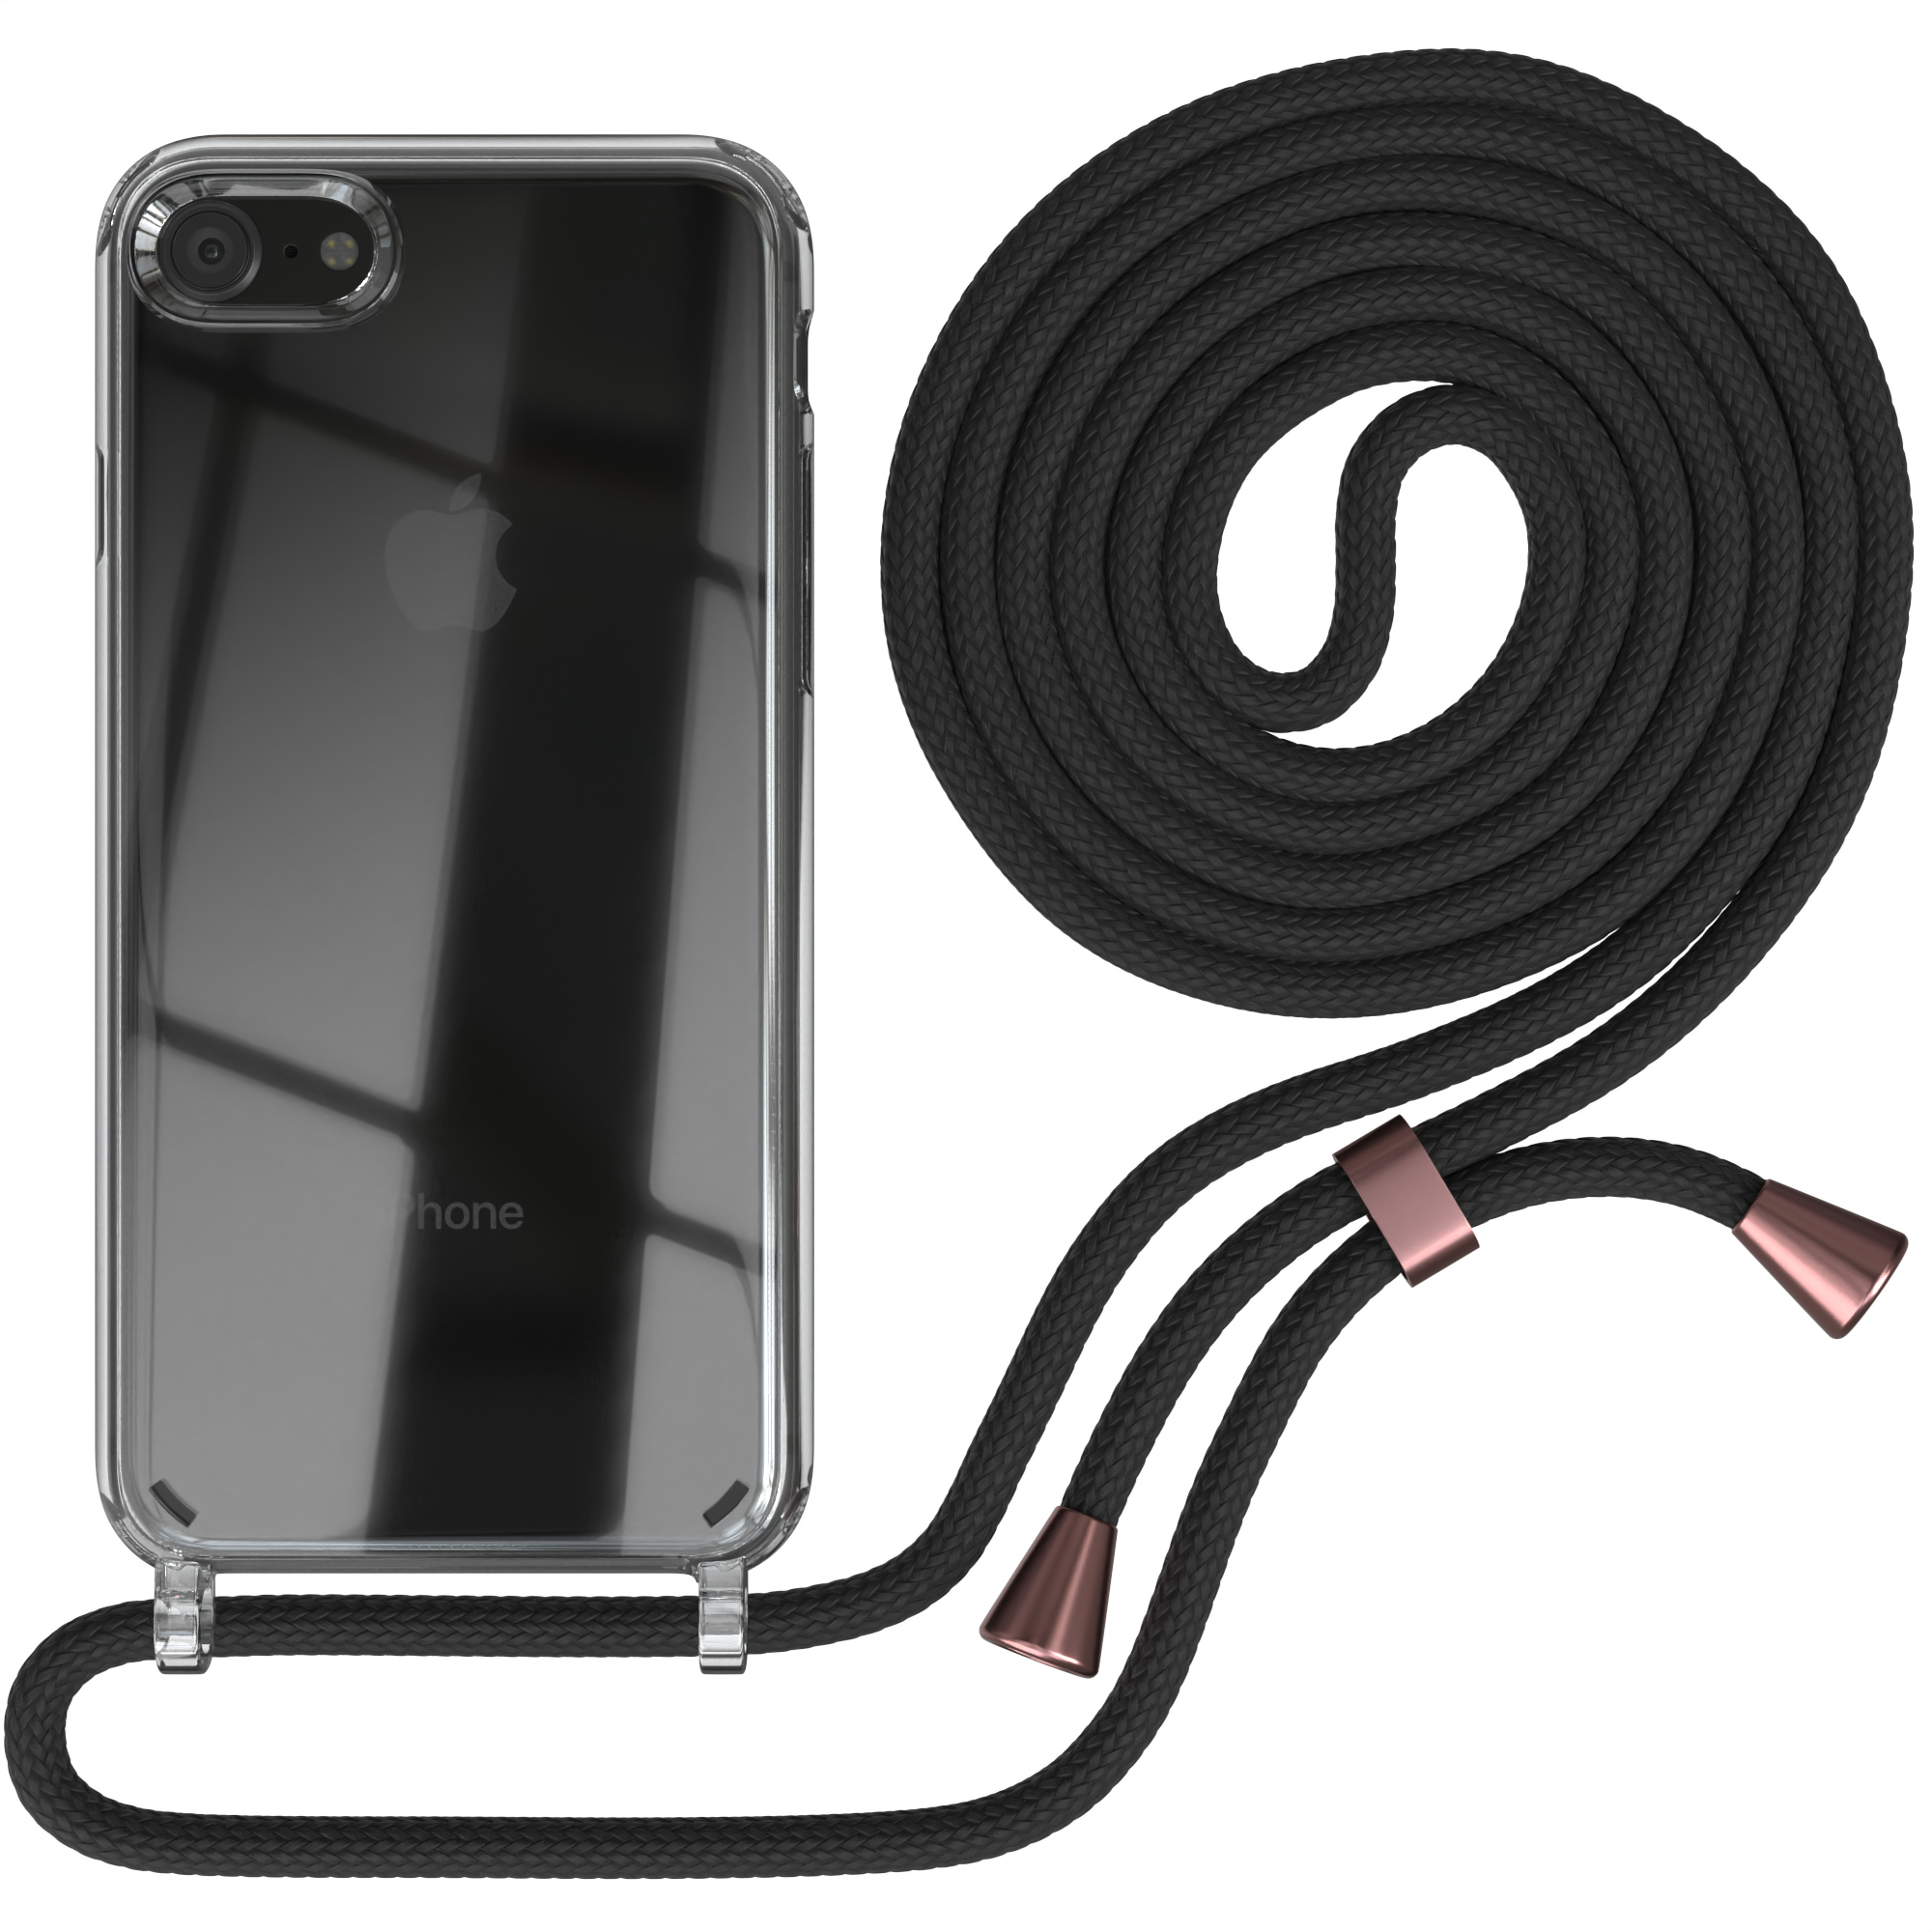 EAZY CASE Clear Cover iPhone SE 2020, Umhängeband, / 2022 mit 8, Schwarz iPhone Rosé 7 Apple, SE / Umhängetasche, Clips 